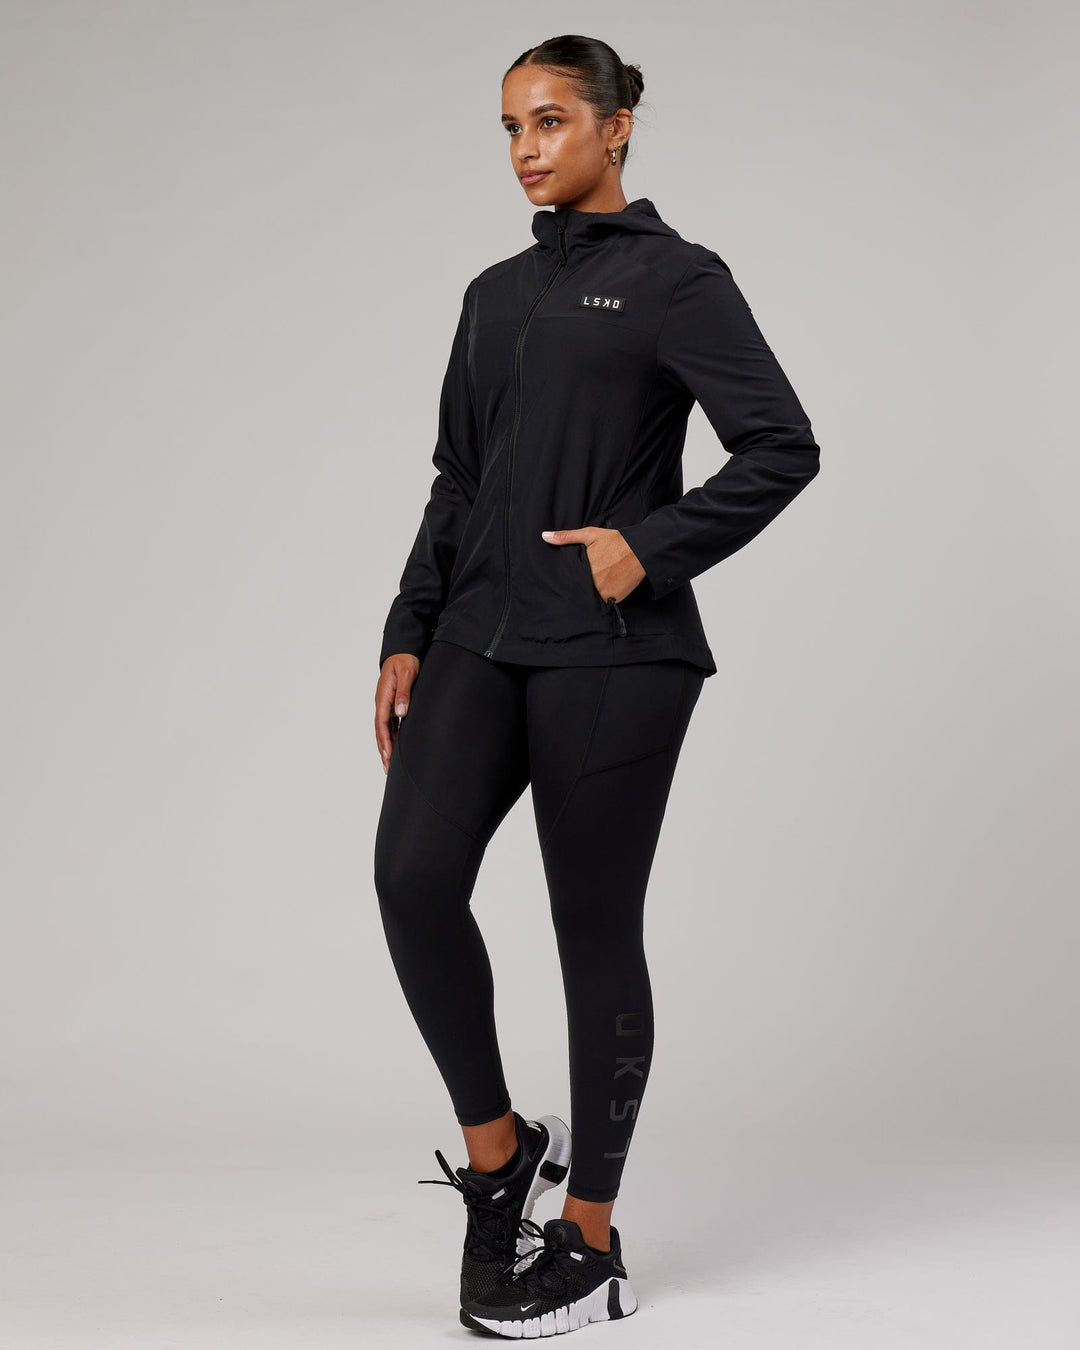 Woman wearing Womens Functional Training Jacket - Black